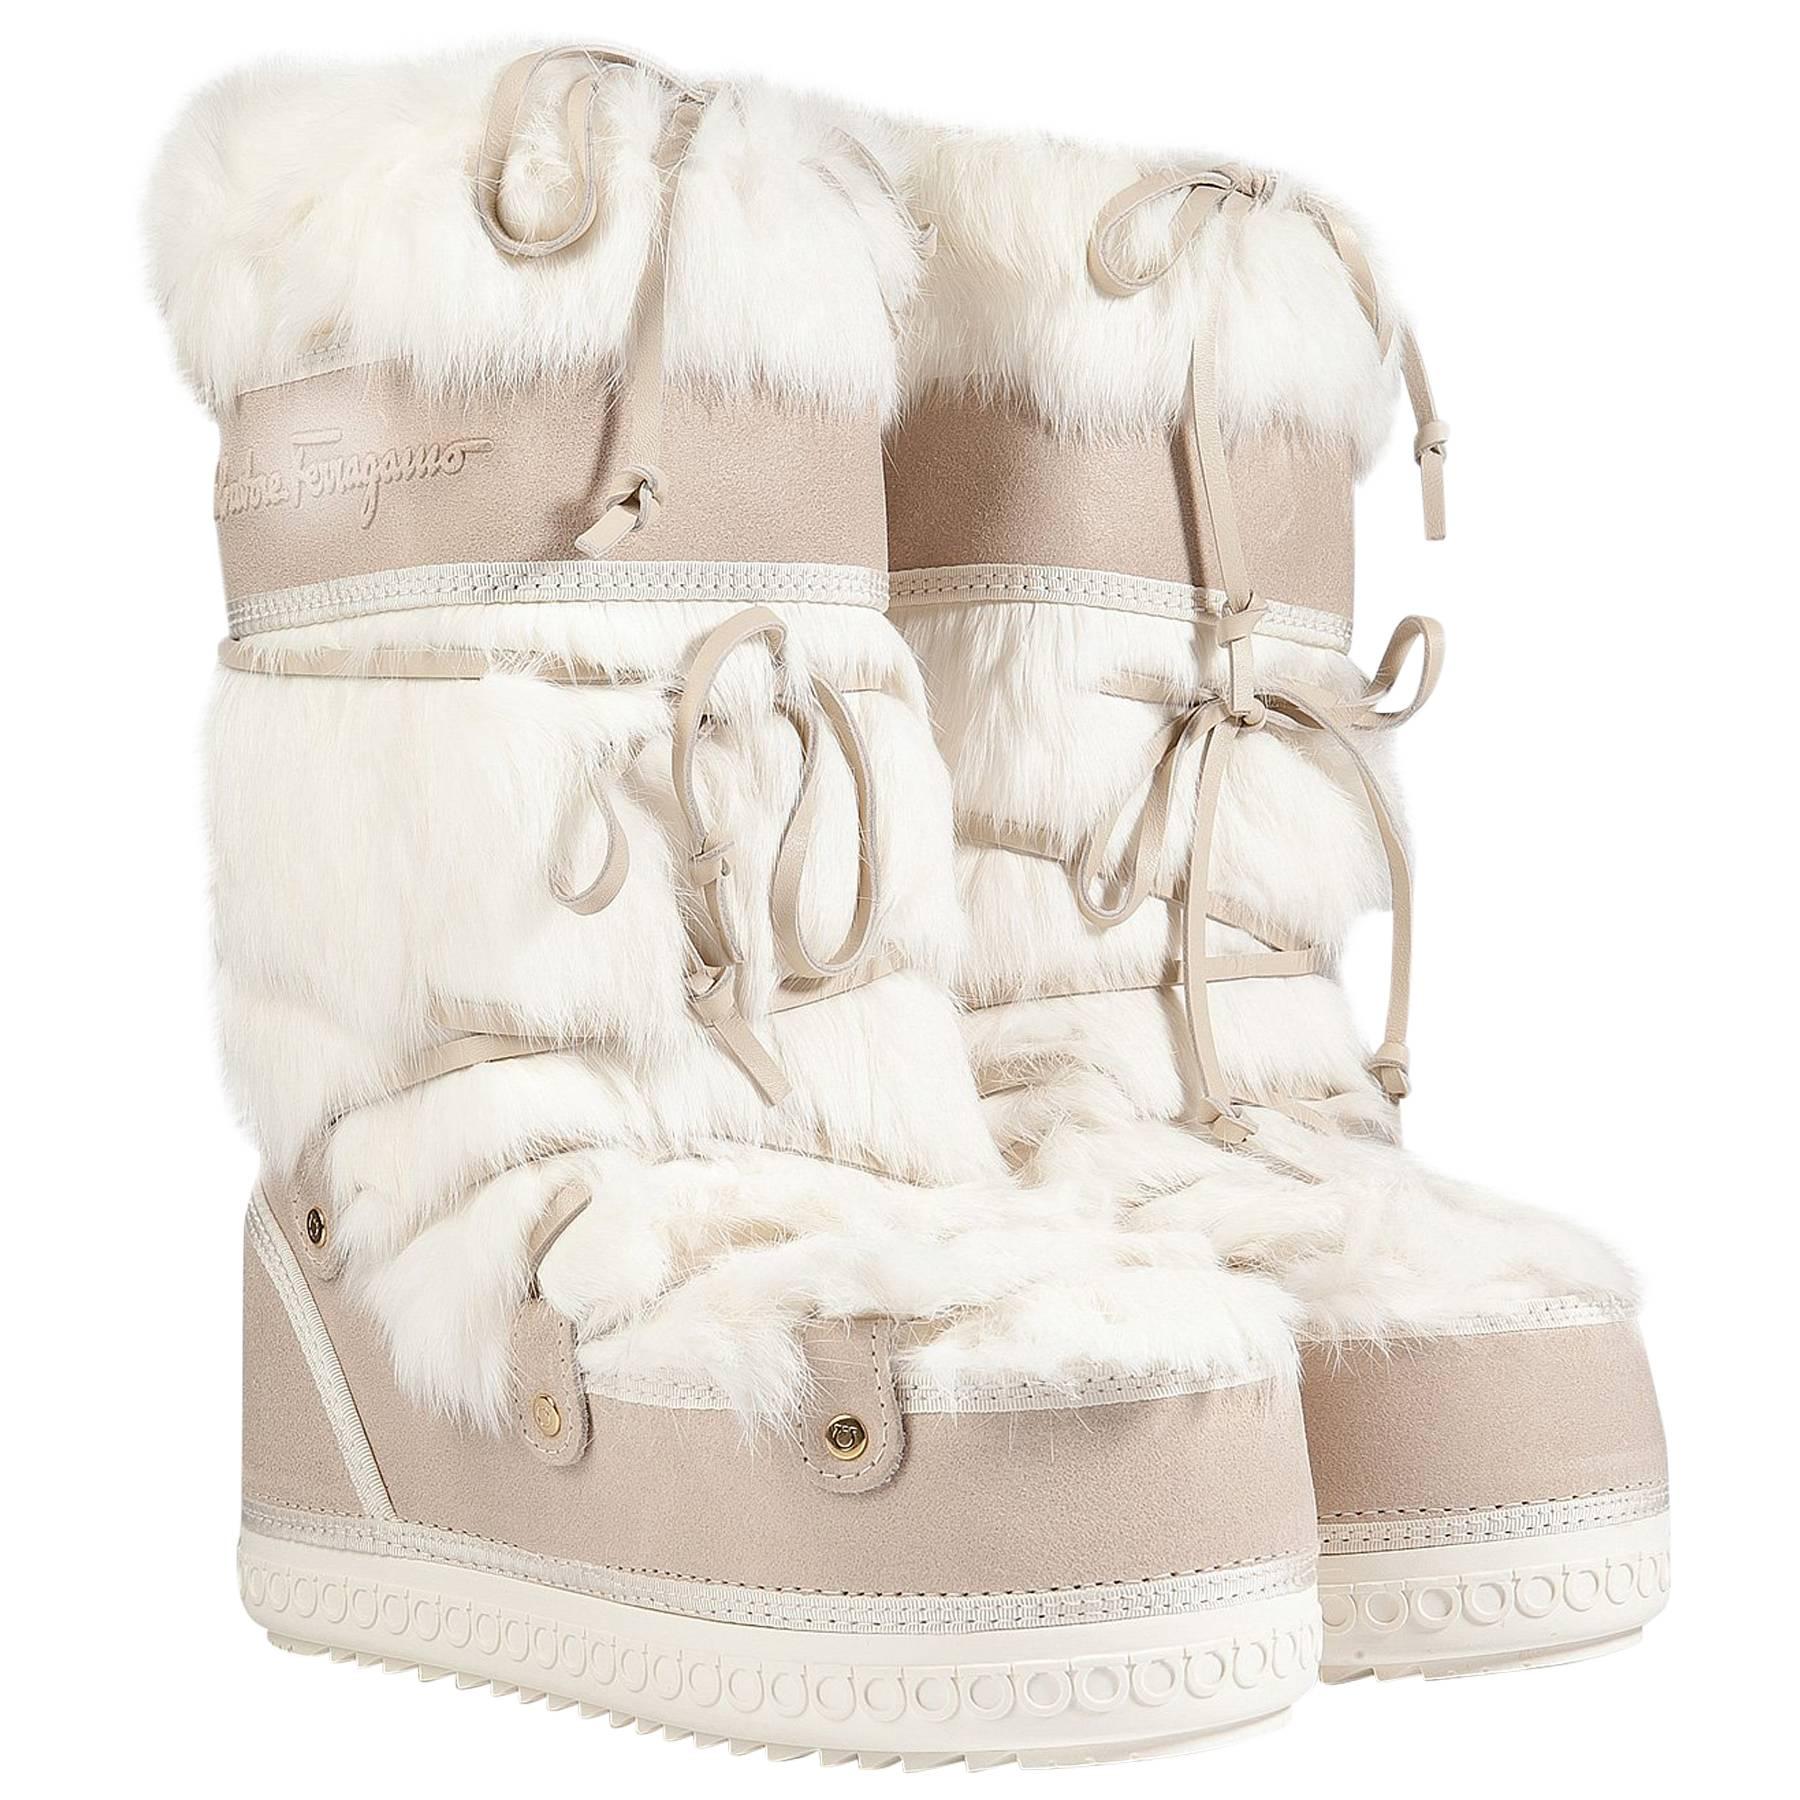 Brandnew Salvatore Ferragamo Moon Snow Winter Fur Boots